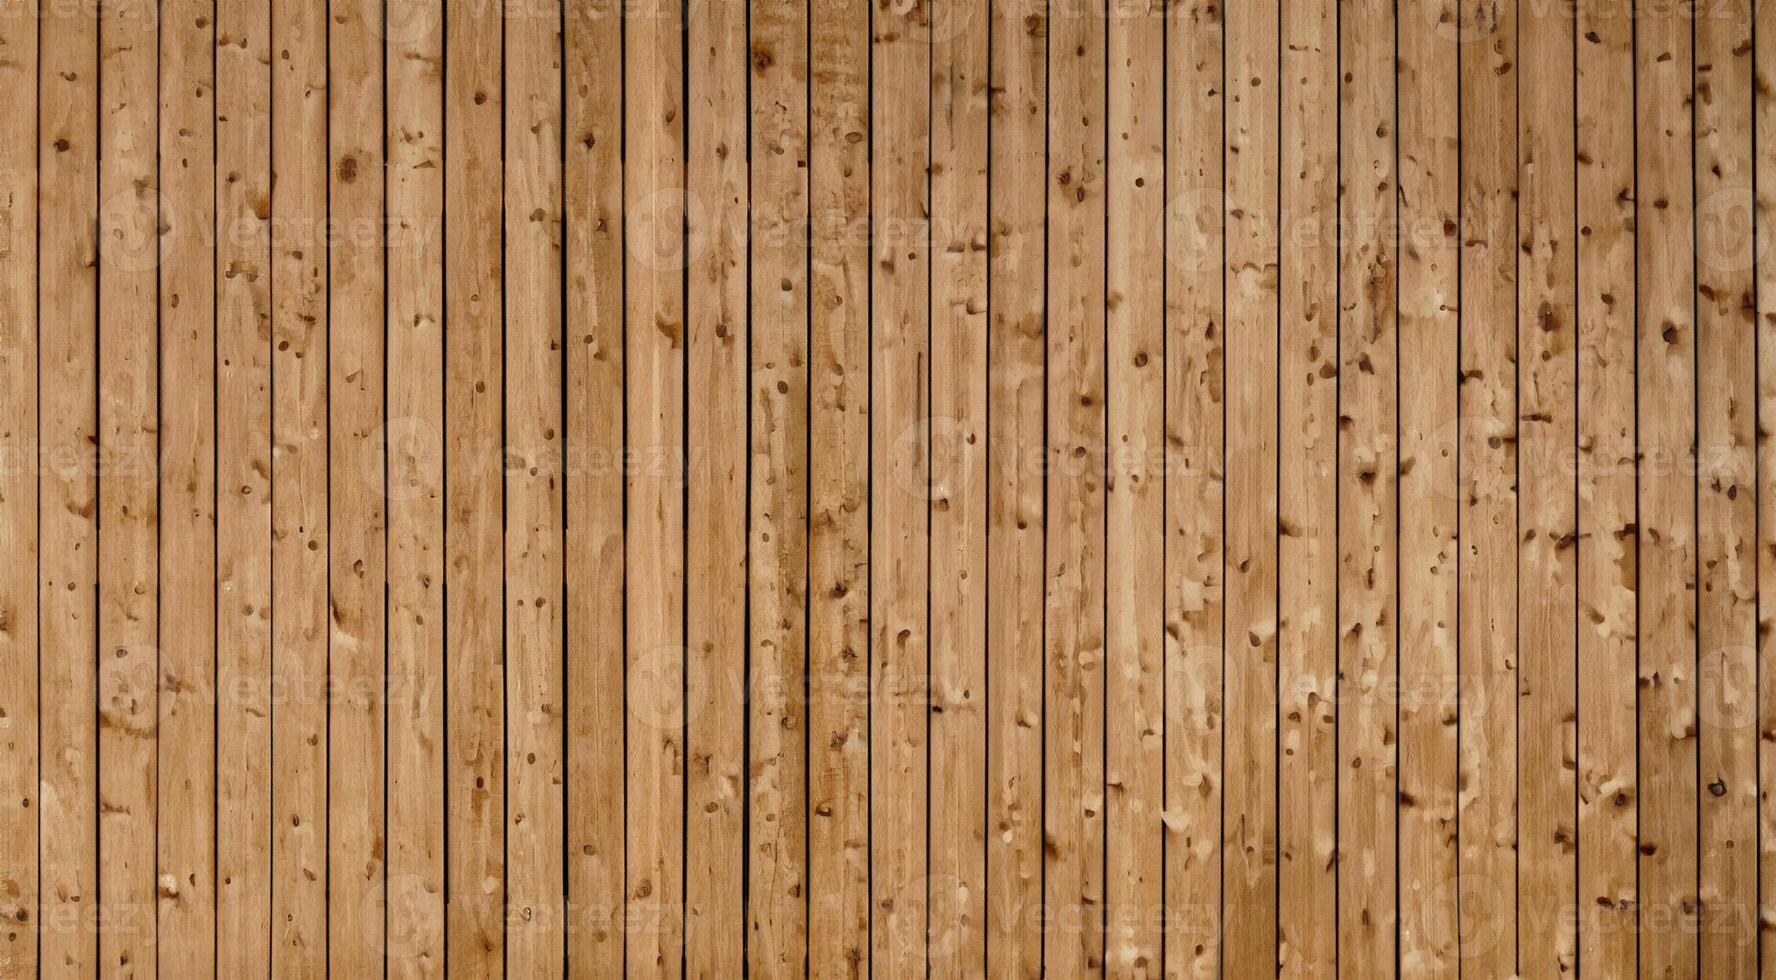 Wooden Panels Background photo